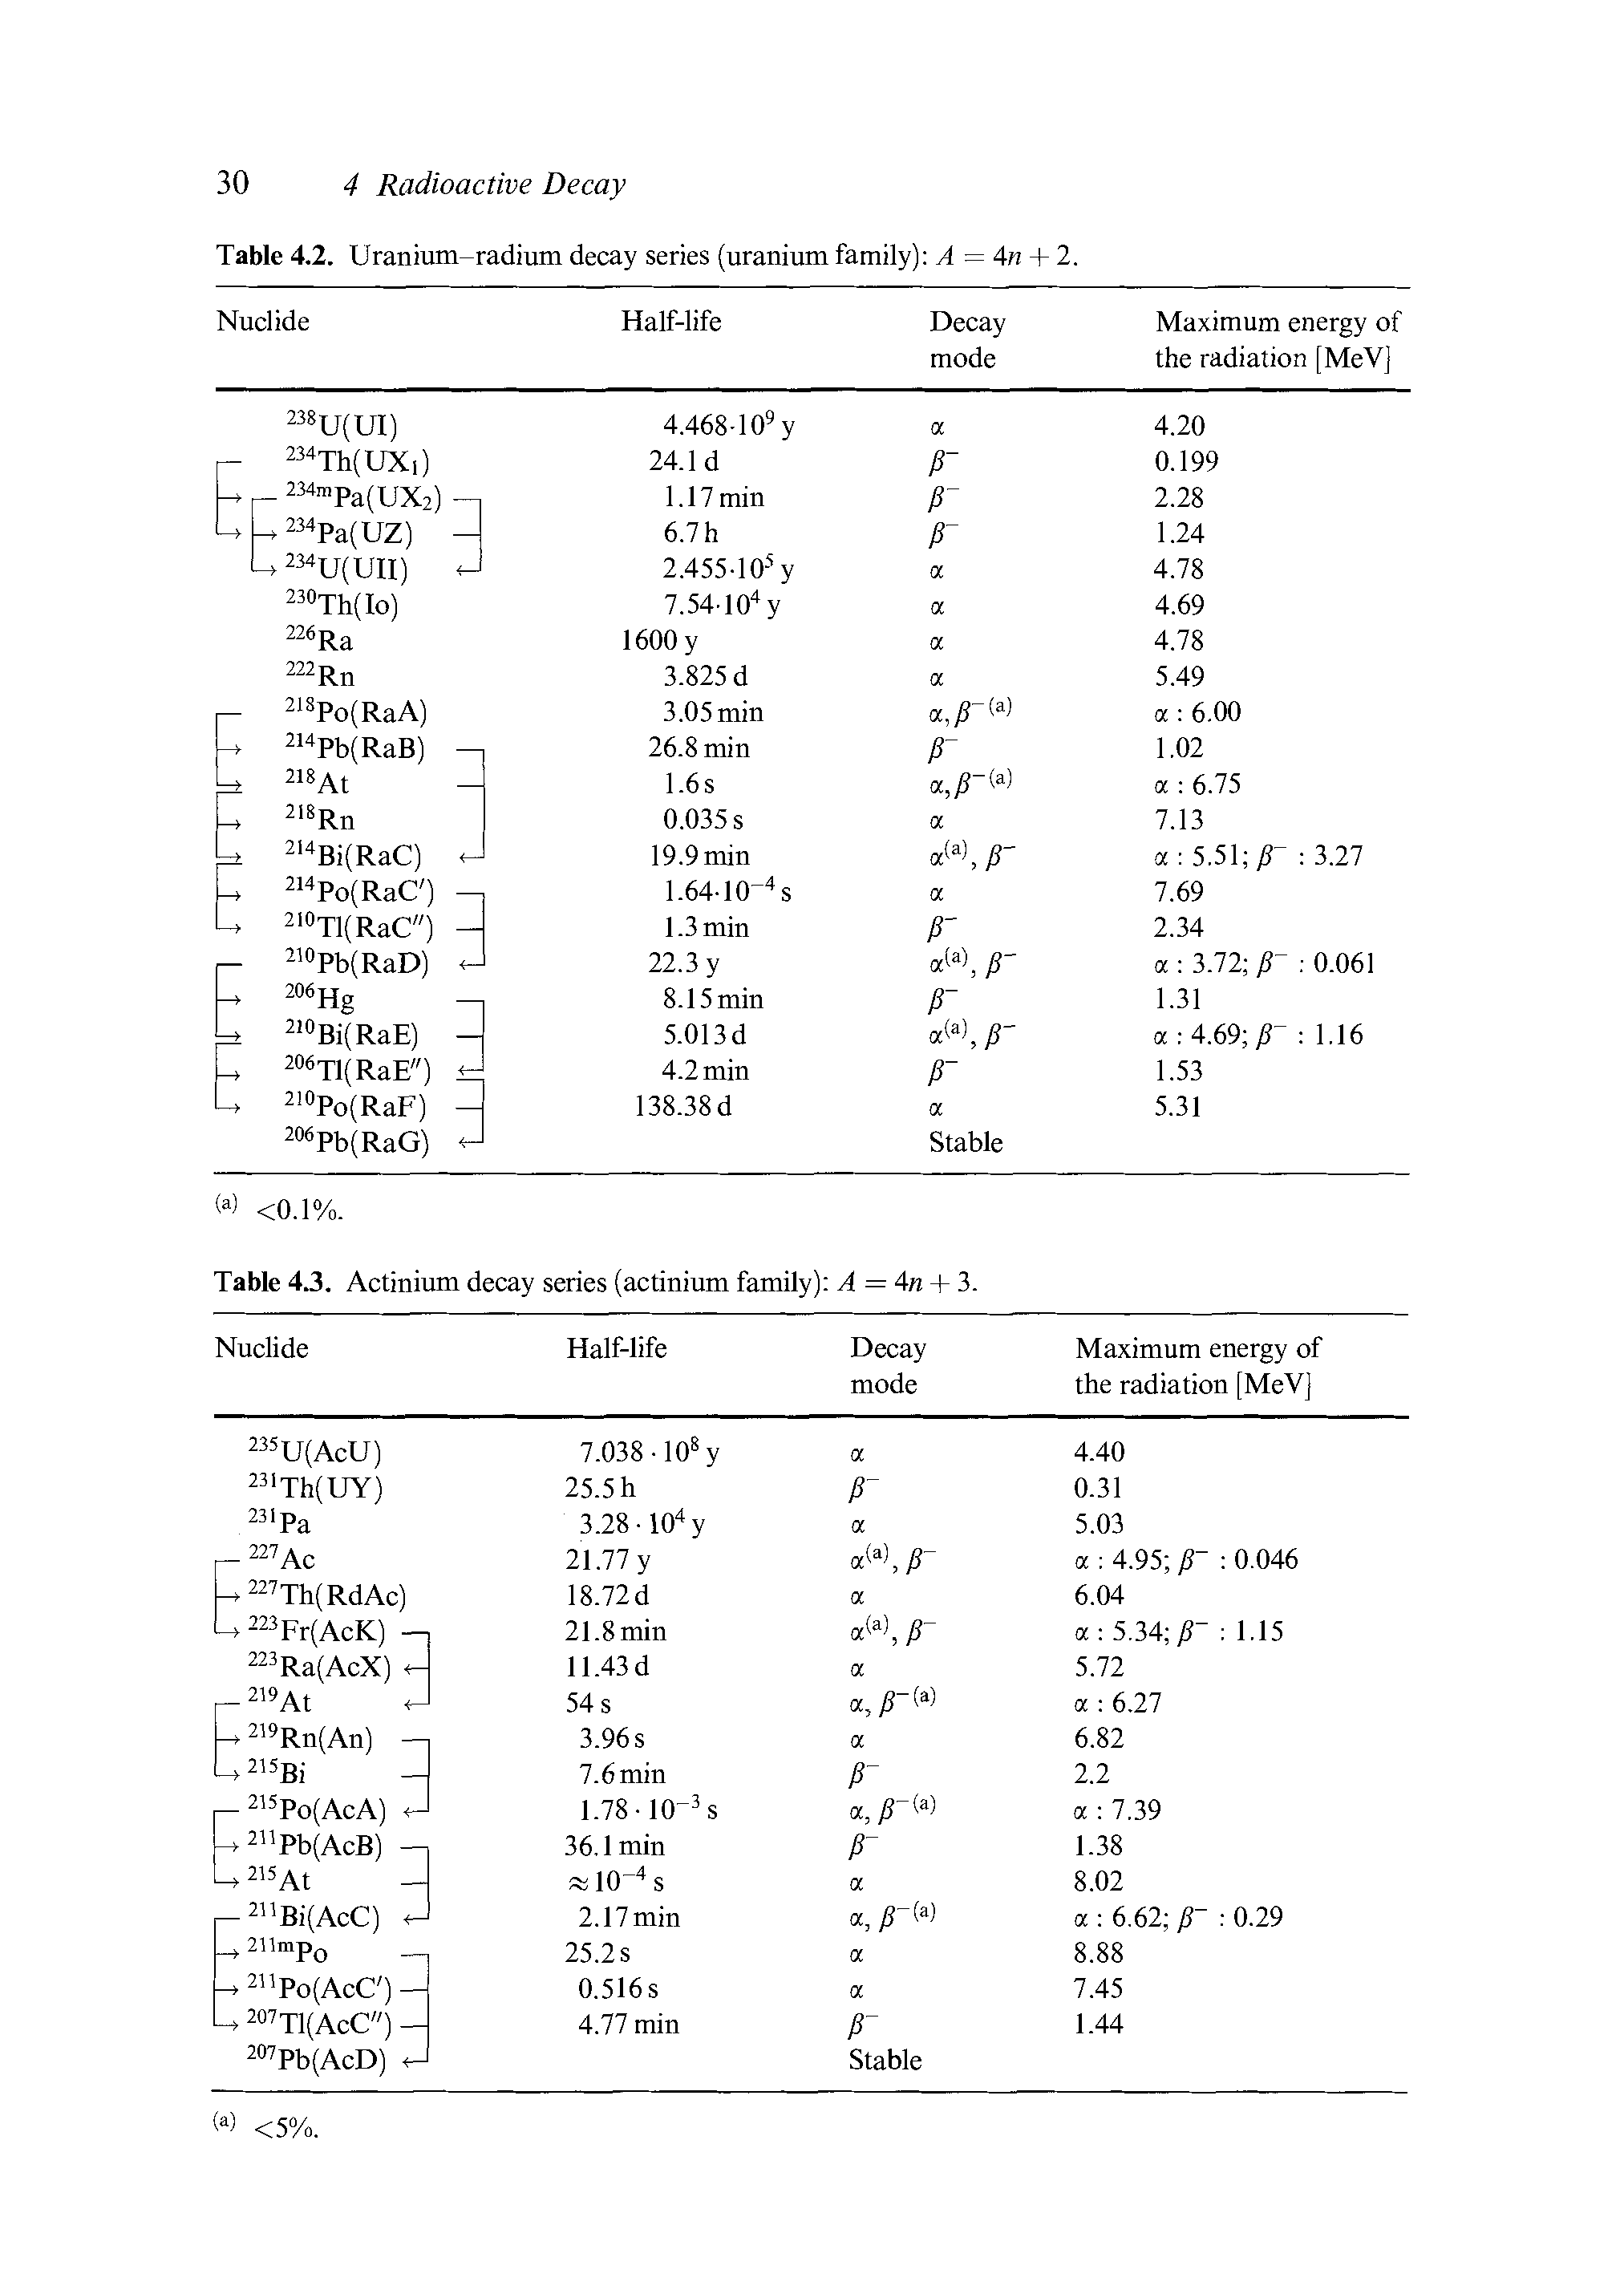 Table 4.2. Uranium-radium decay series (uranium family) A = An+ 2.